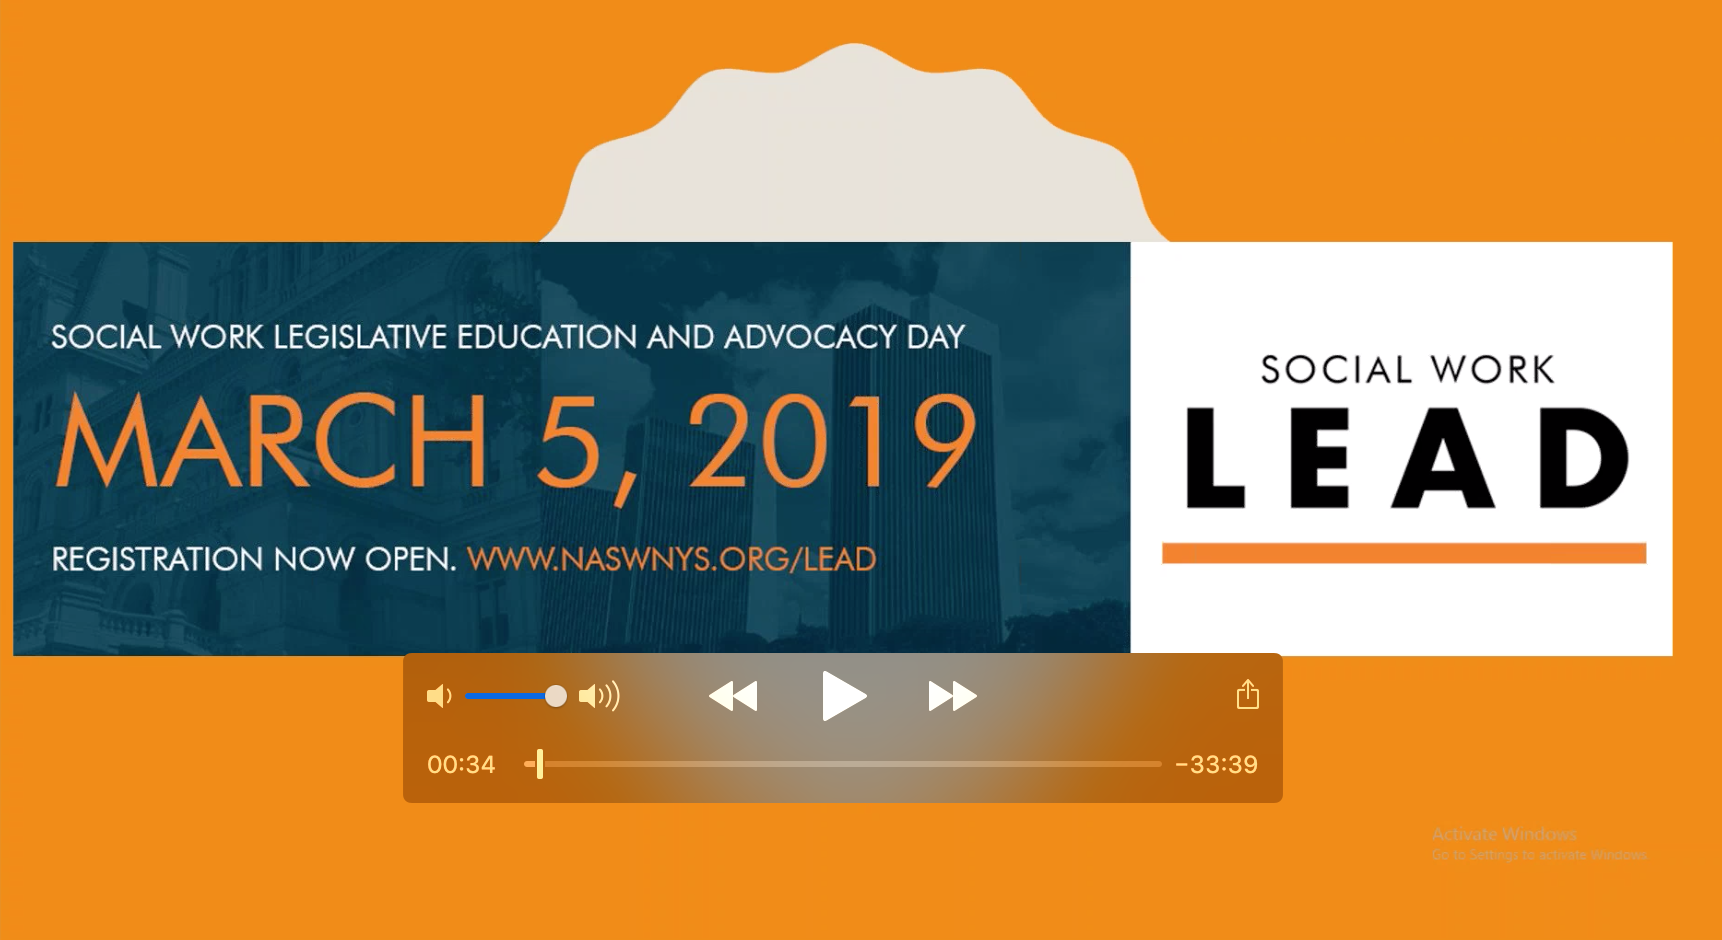 Legislative Education and Advocacy Day (LEAD) NASWNYS